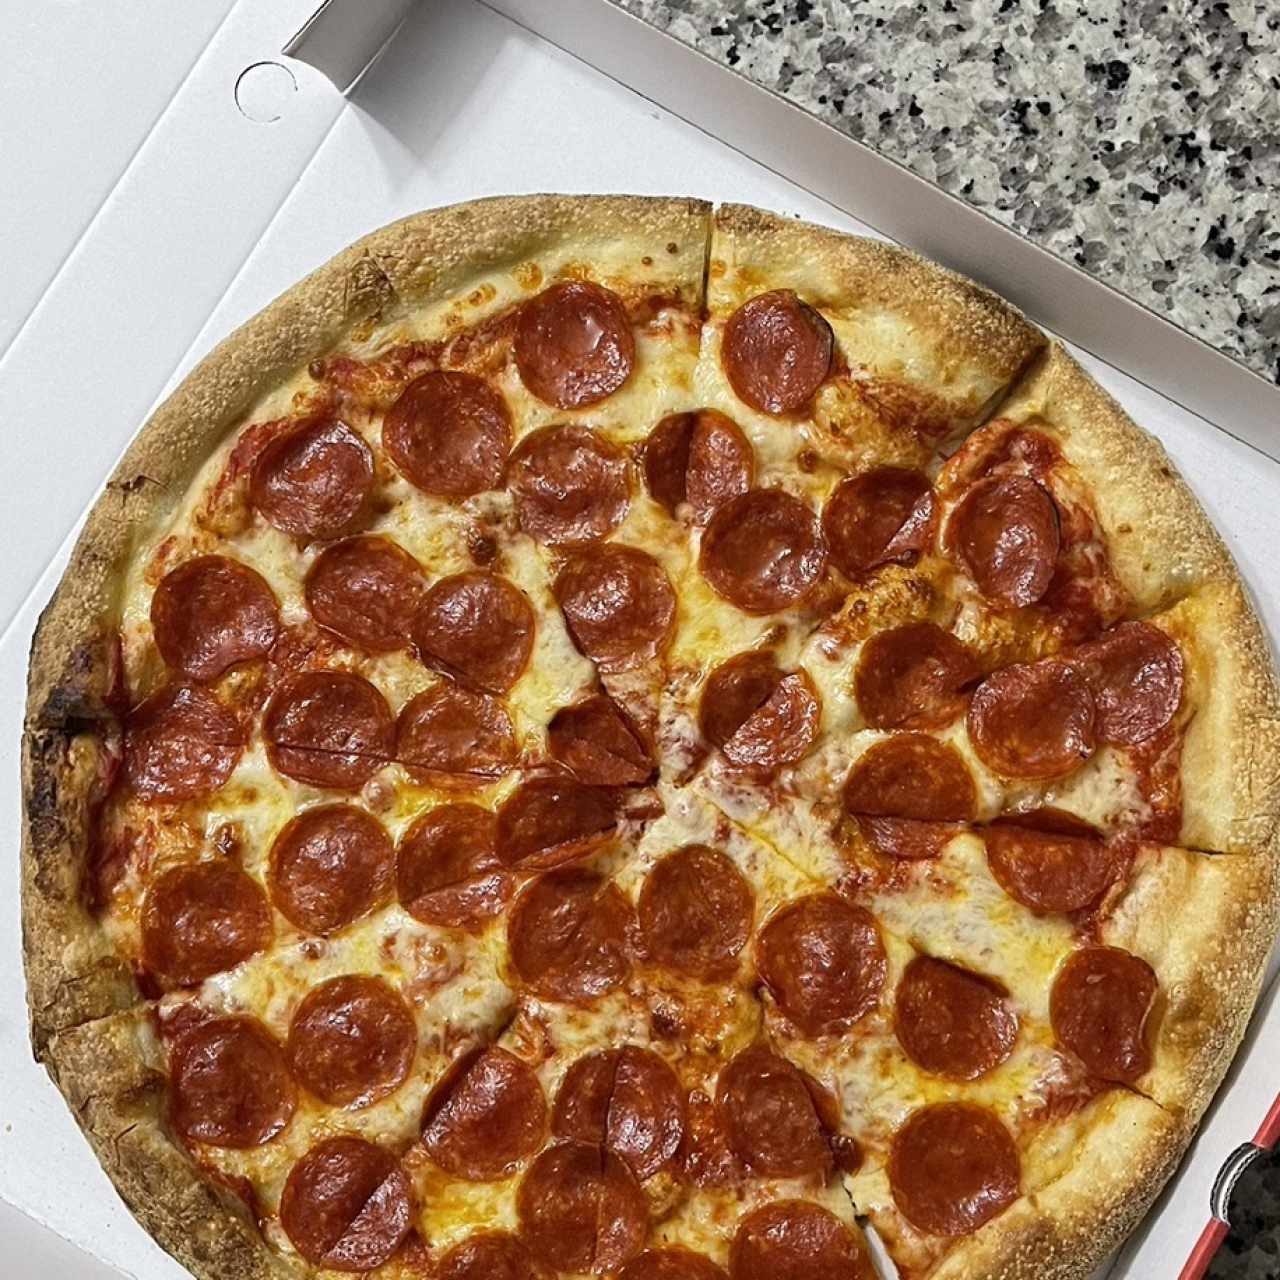 Pizzas Rojas - Pepperoni